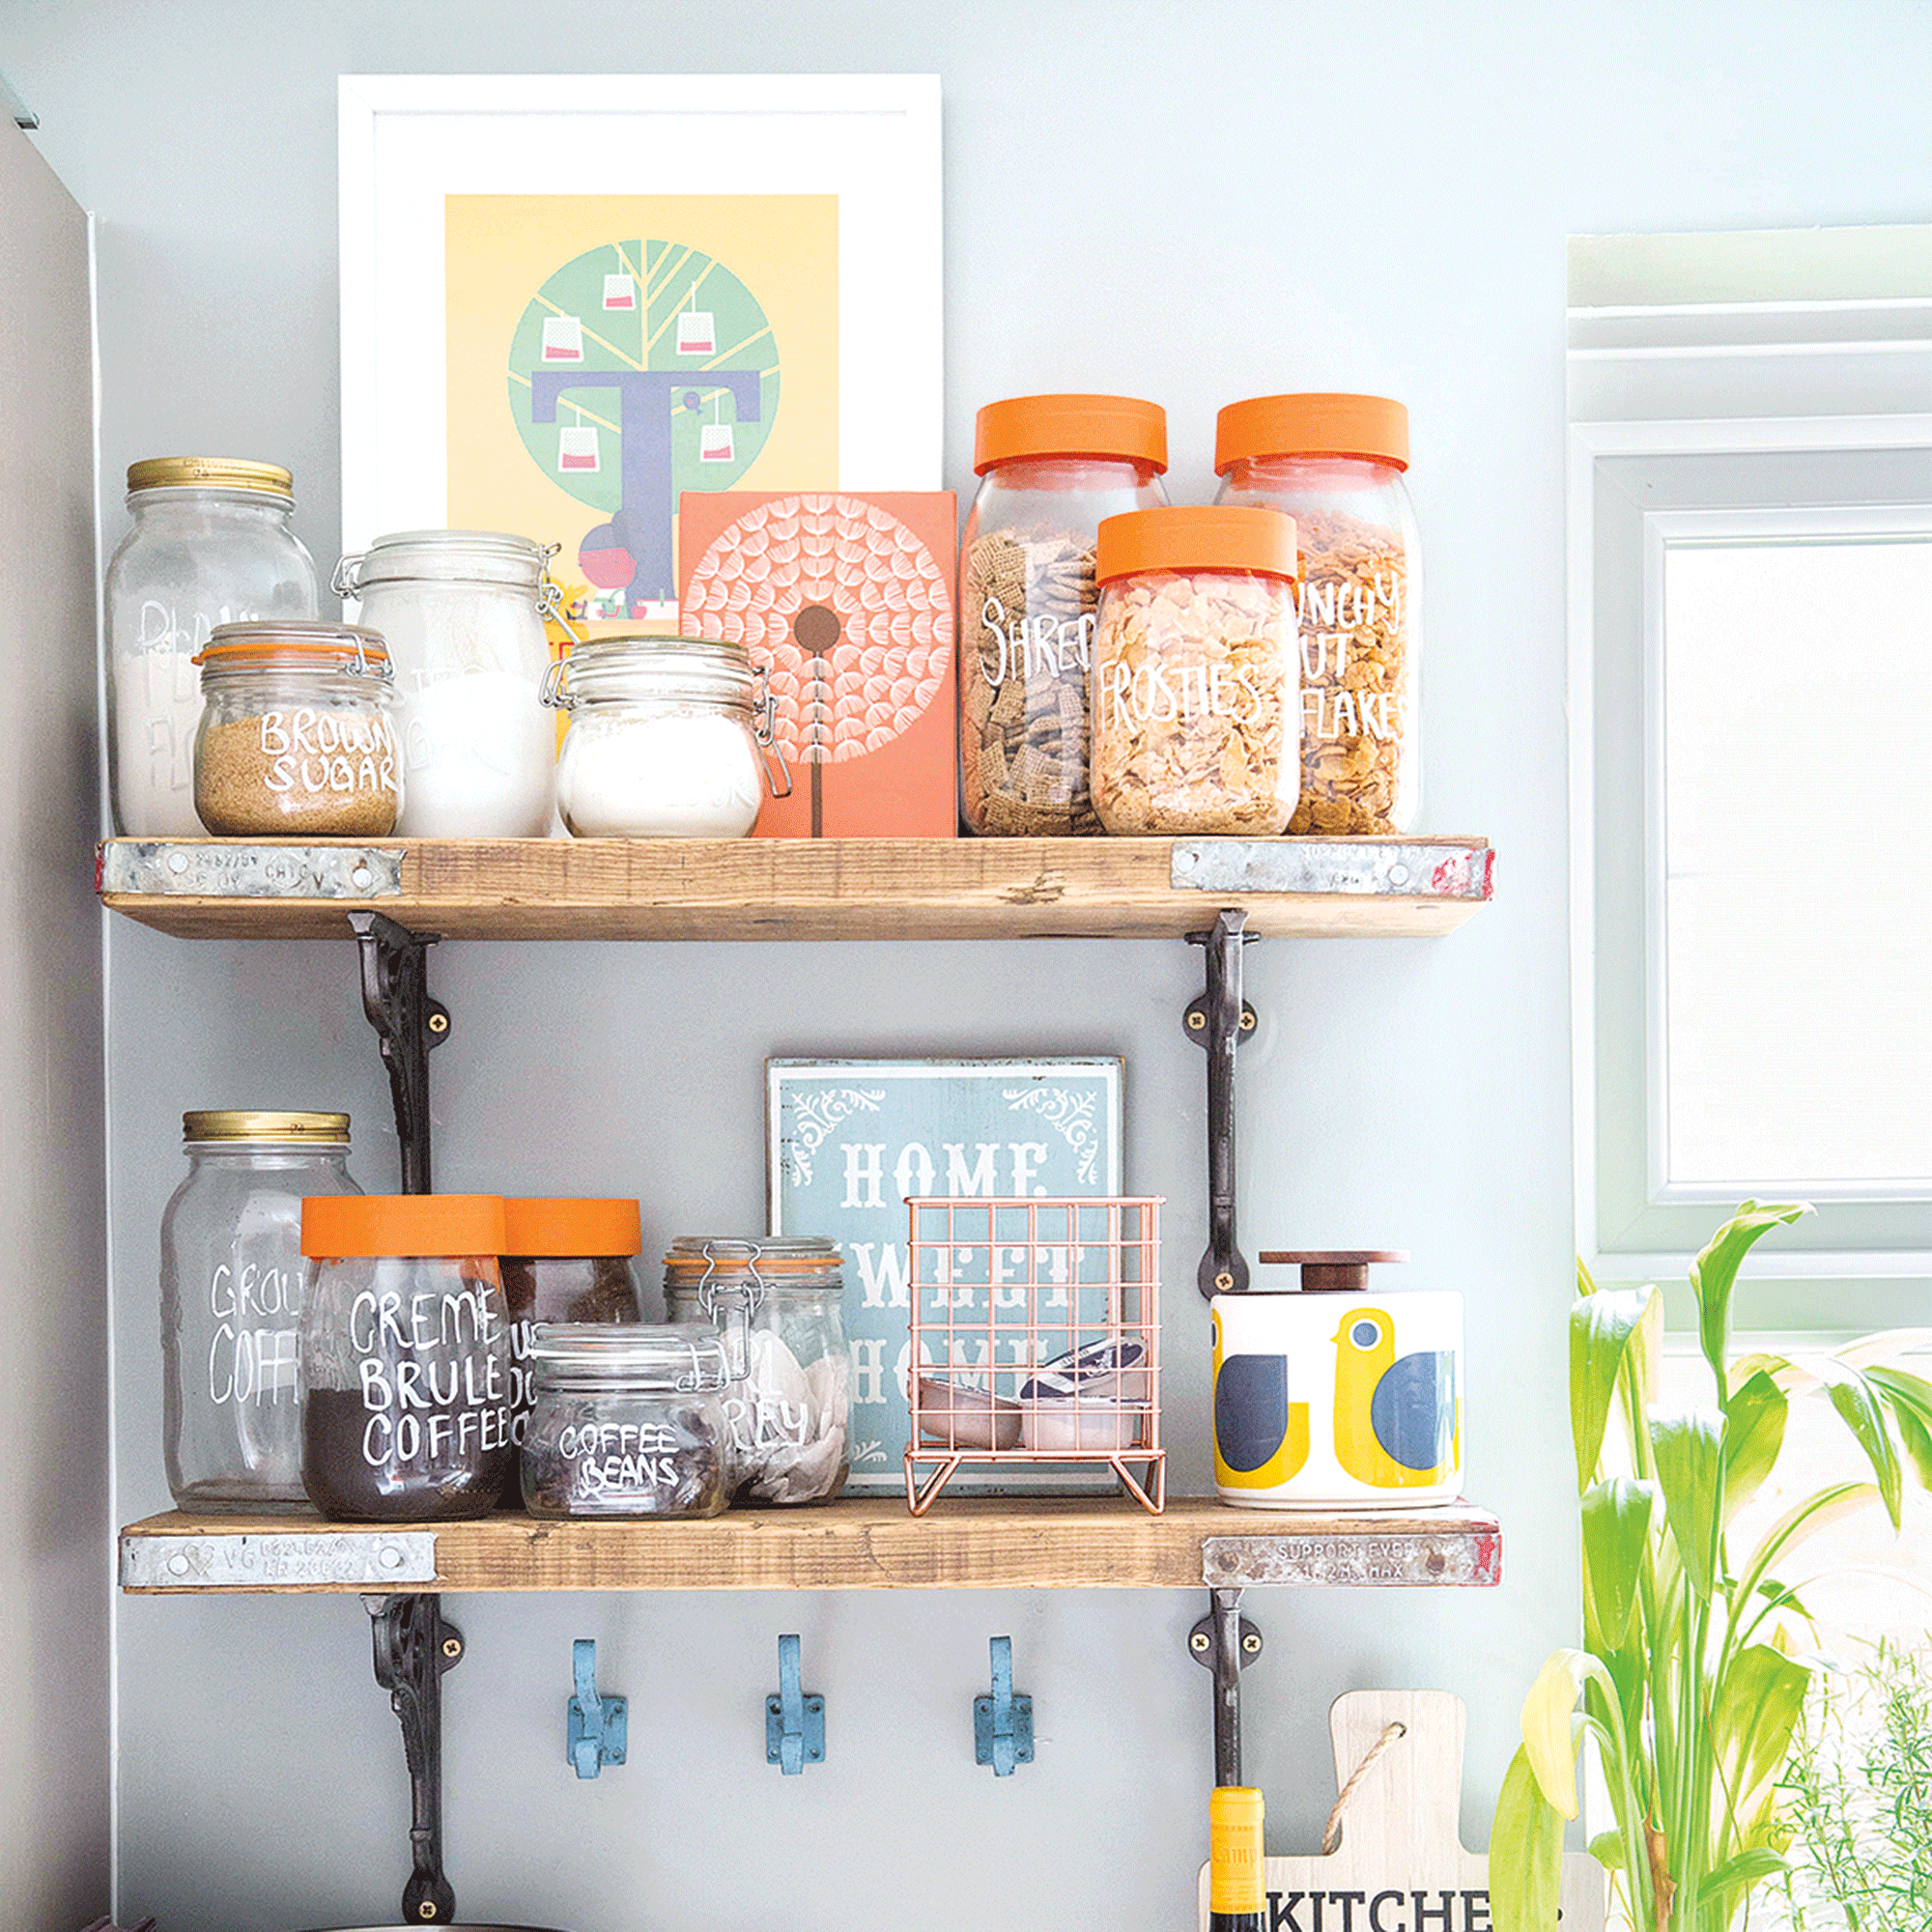 Kitchen shelves with storage jars